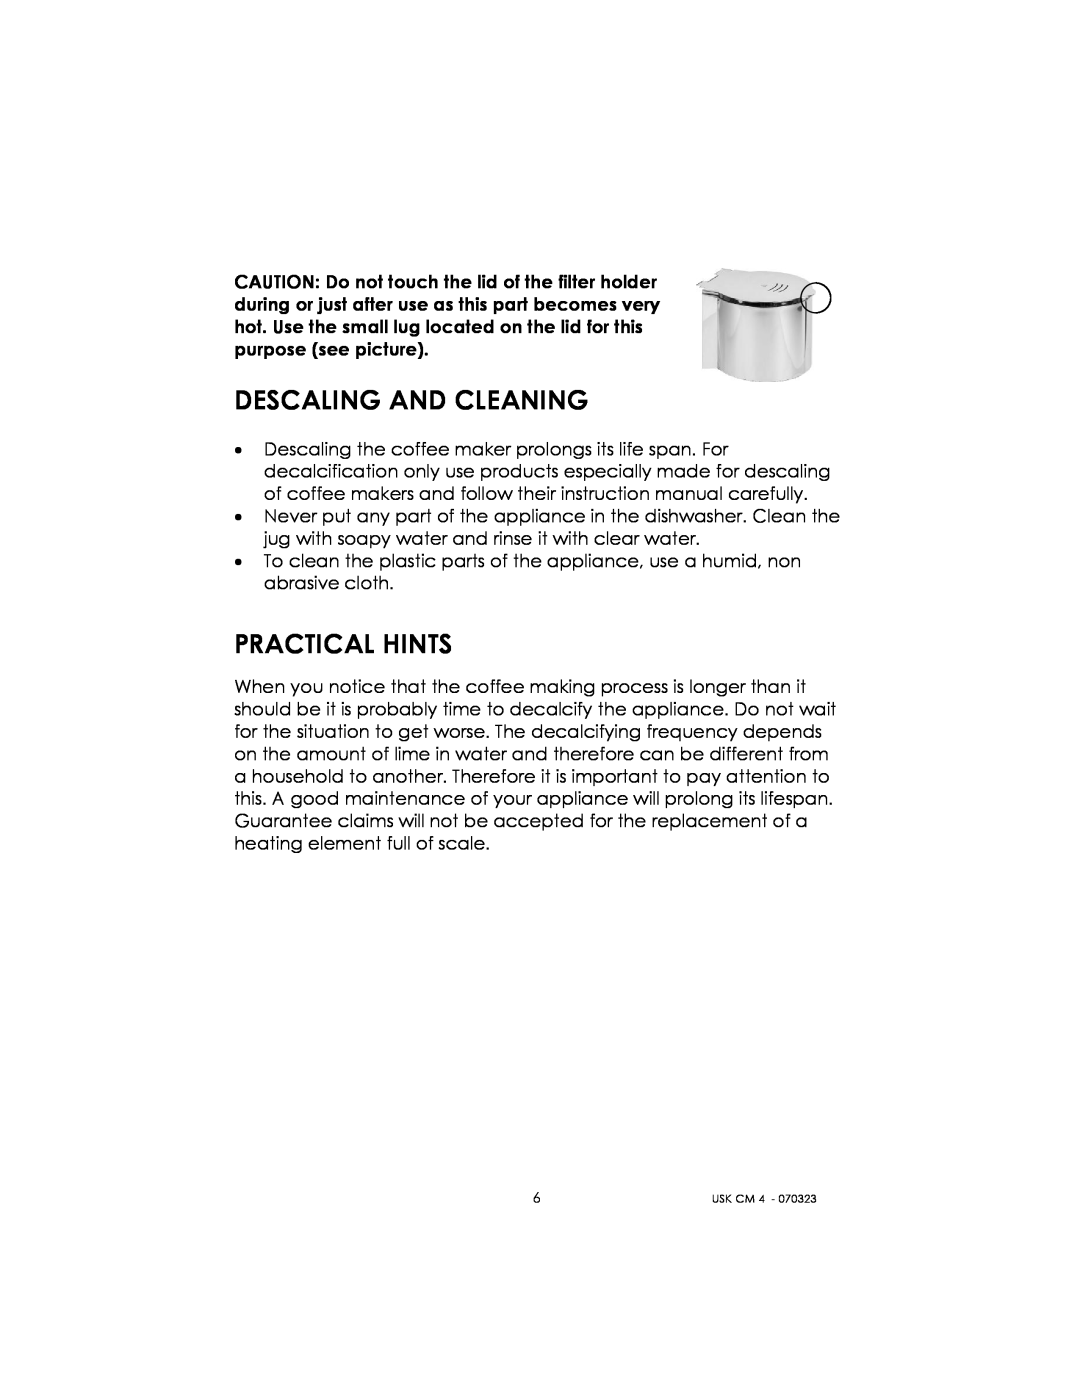 Kalorik USK CM 4 manual Descaling And Cleaning, Practical Hints 